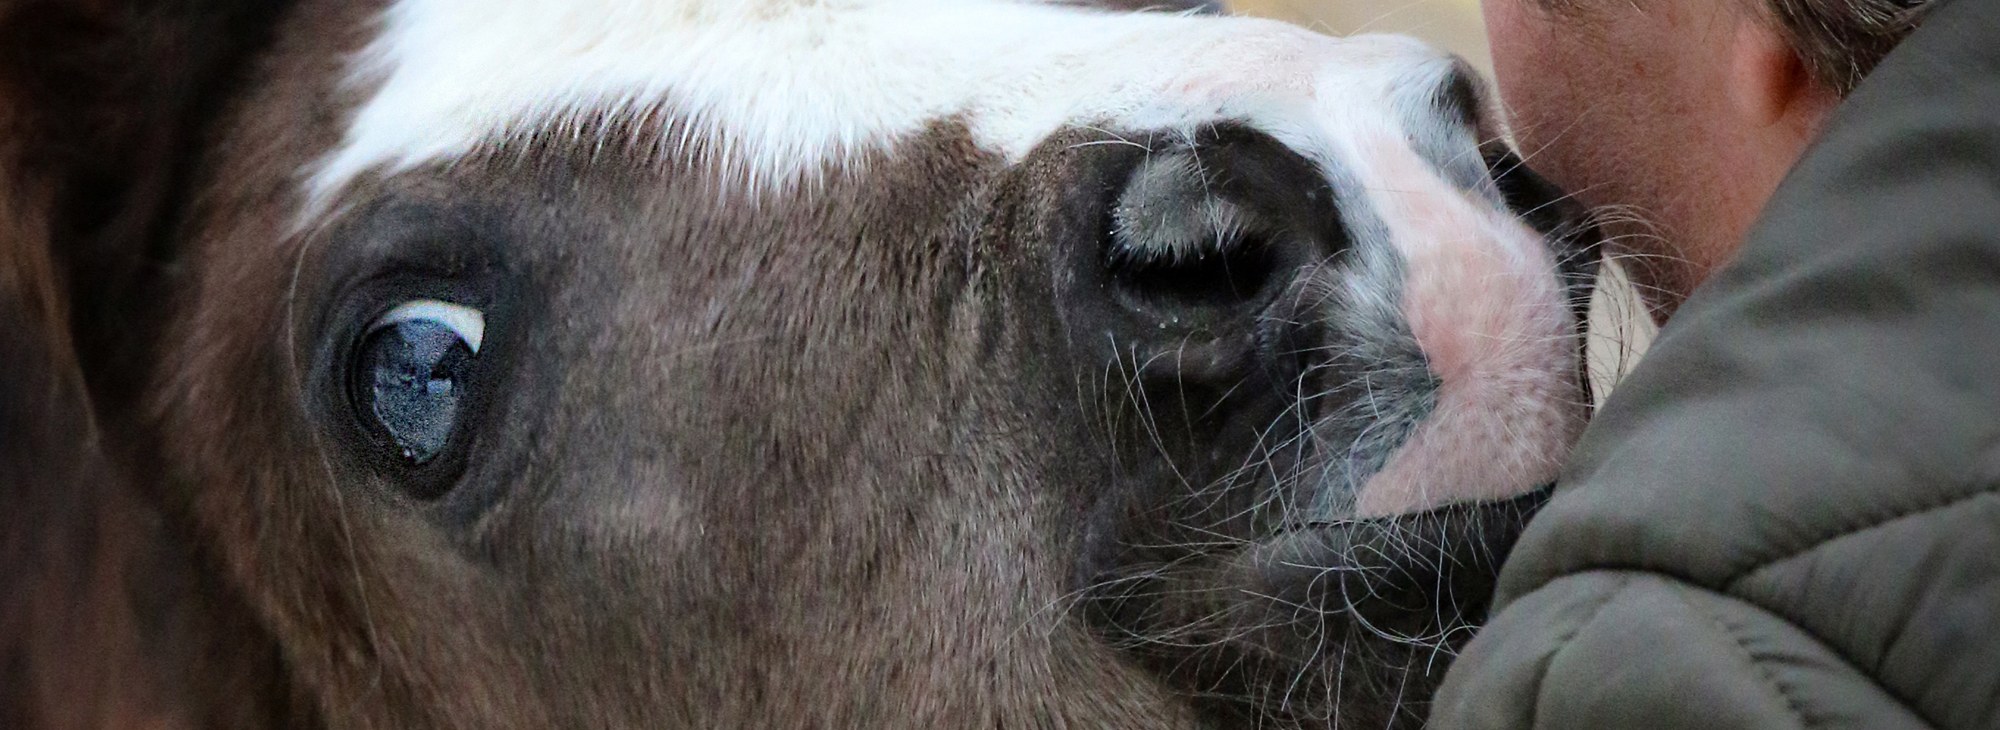 Morgan foal snuggling its owner